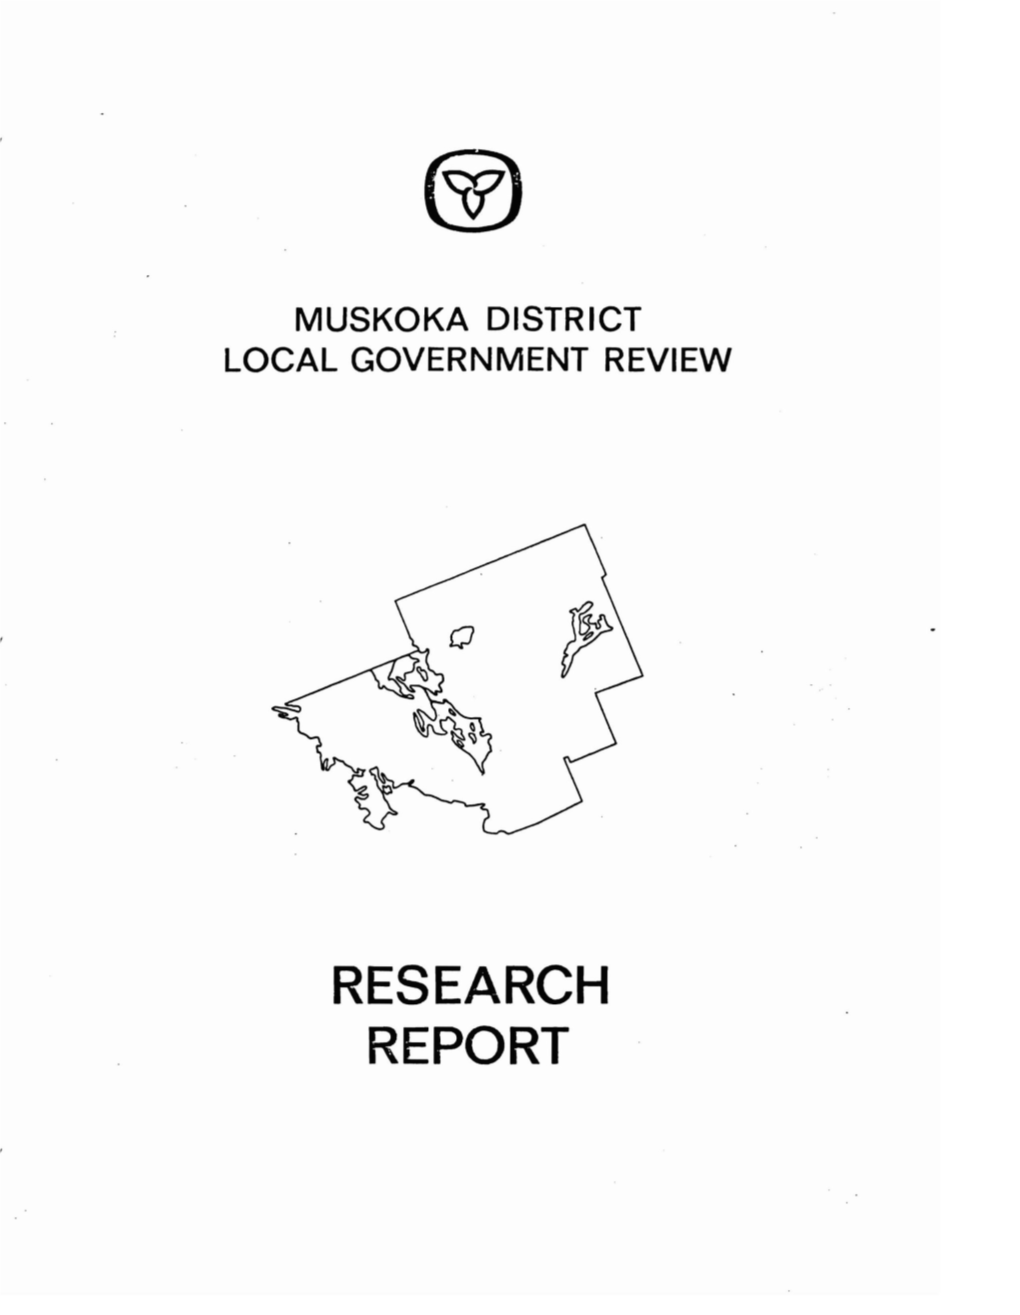 Research Report Muskoka District